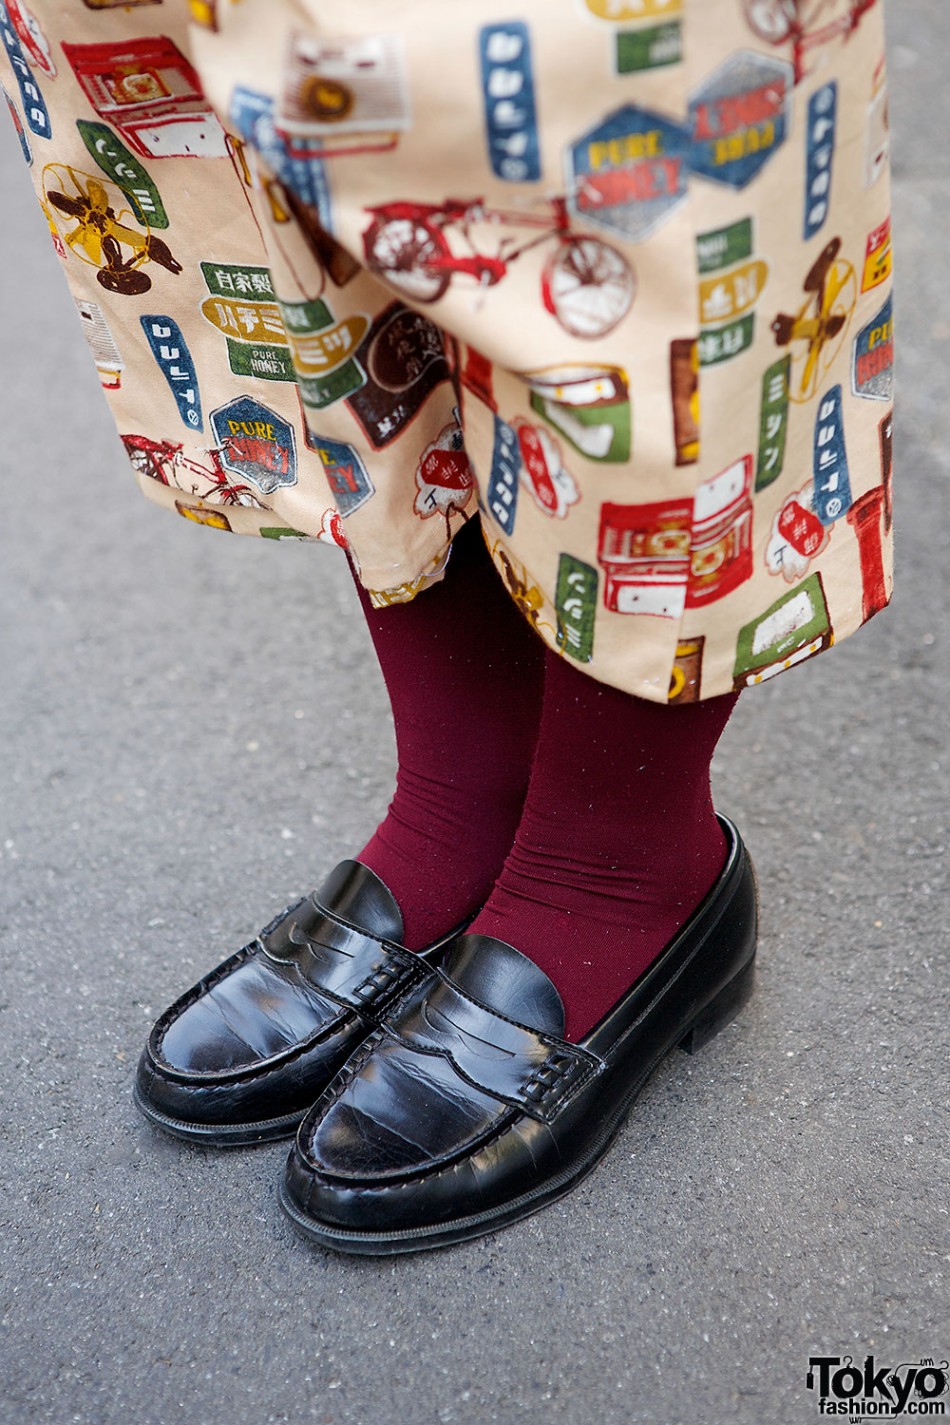 Harajuku Girls in Kimonos w/ Handmade Items & Dr. Martens – Tokyo Fashion